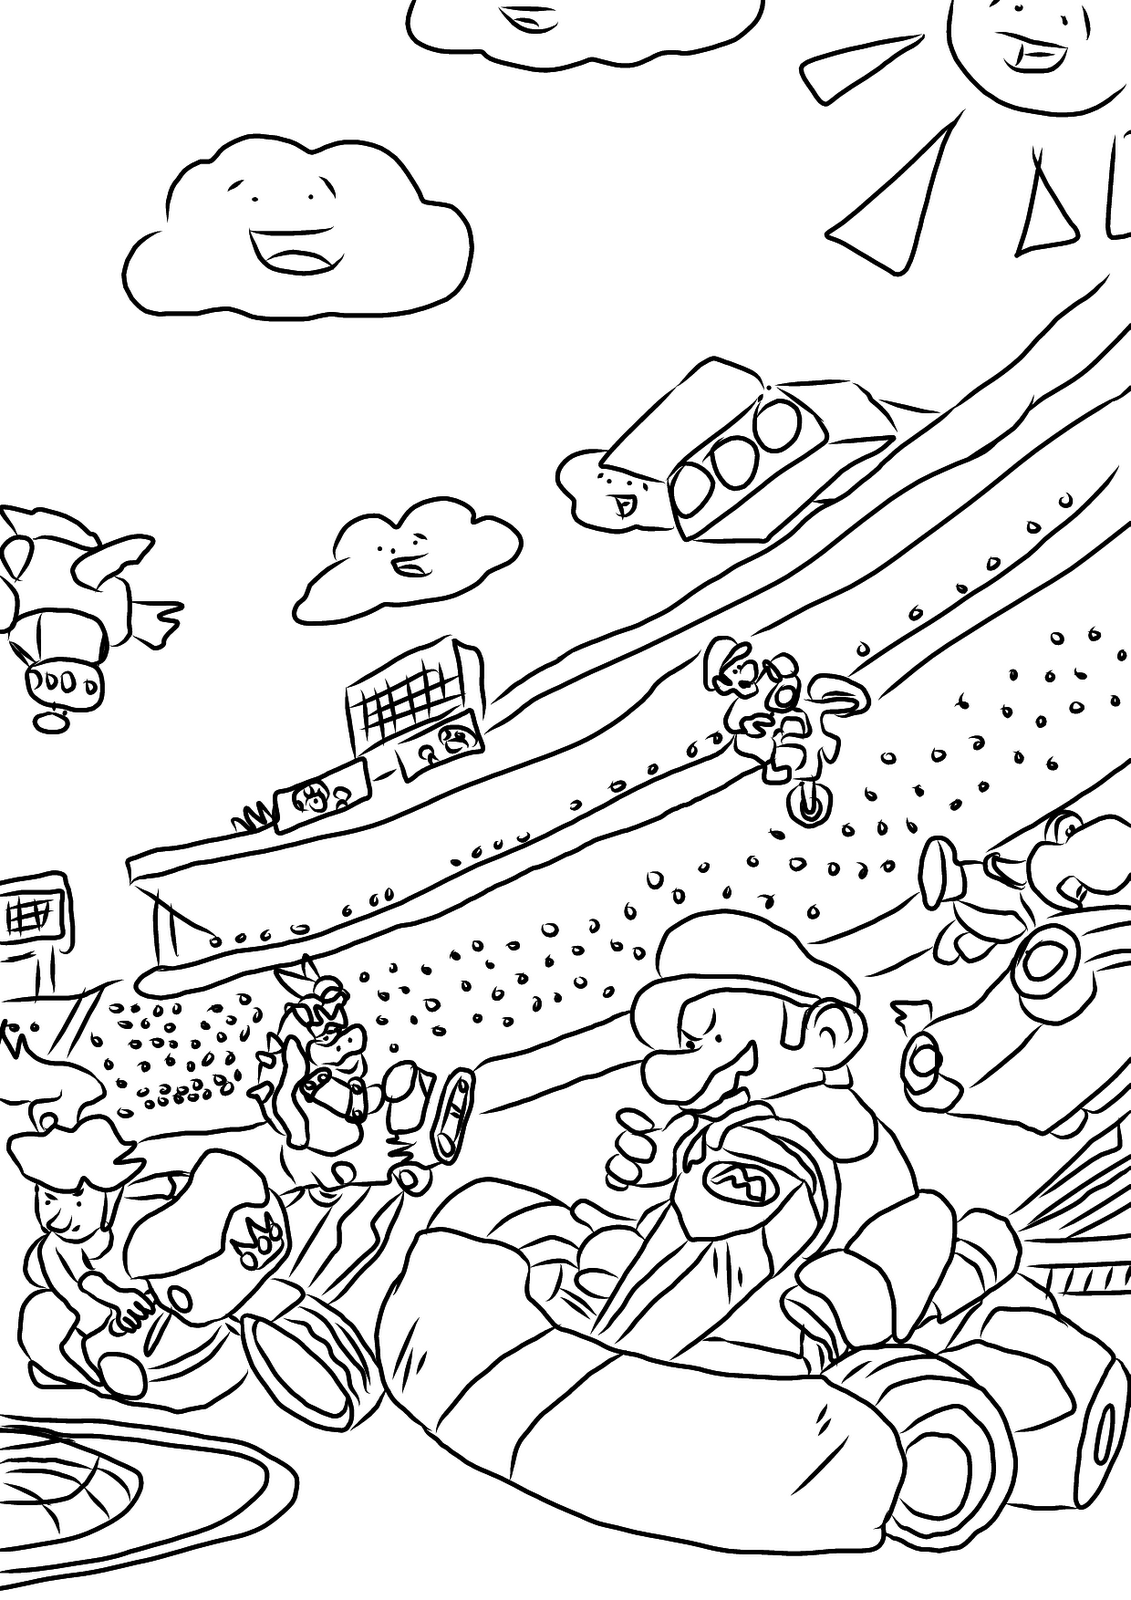 Drawing Mario Kart 20 Video Games – Printable coloring pages